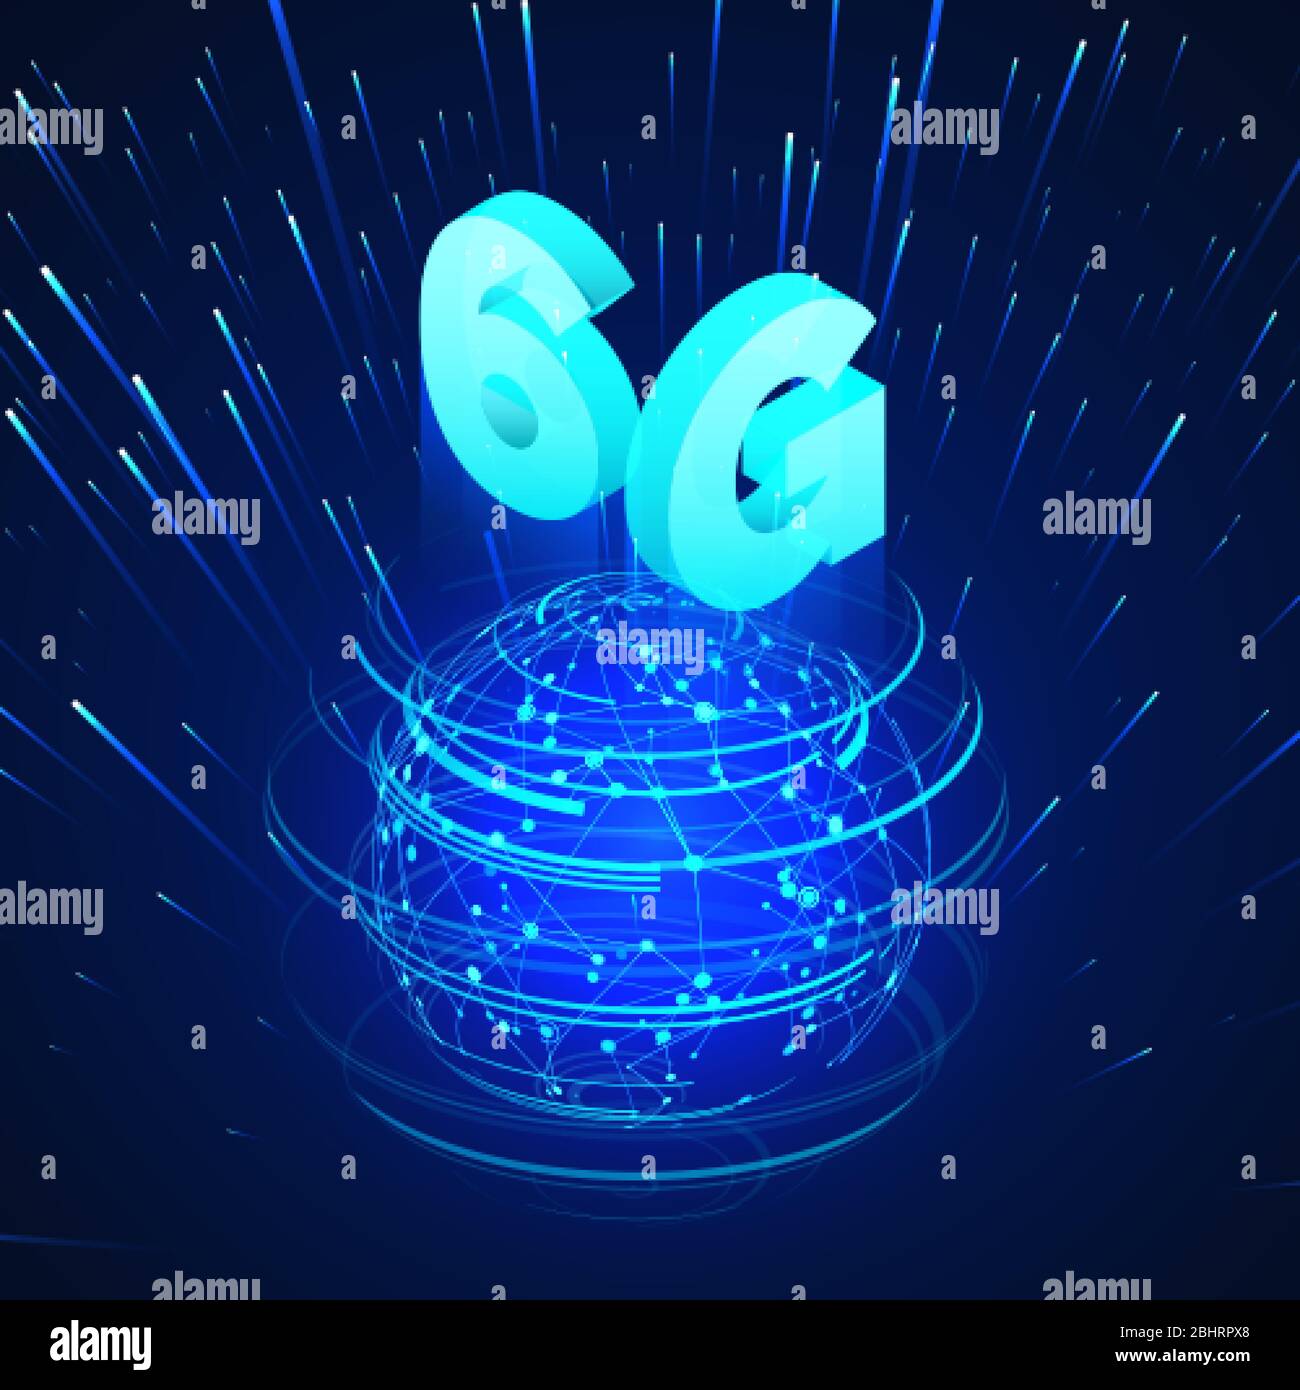 High speed 6G global mobile networks. Business isometric illustration global network hologram and text 6g. Wireless web banner. Modern data transfer t Stock Vector